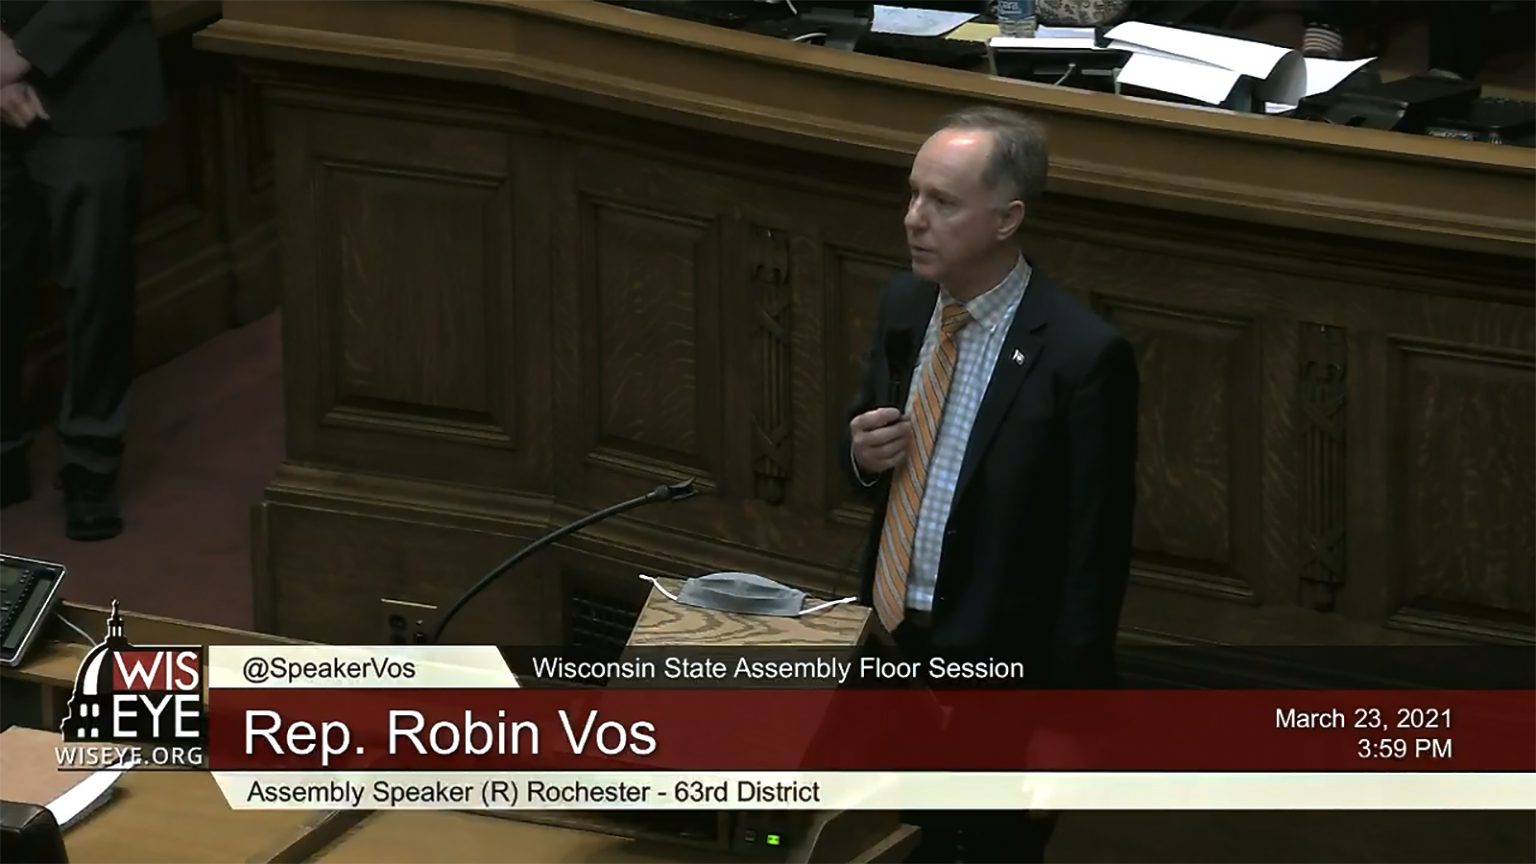 A WisconsinEye screenshot of Wisconsin Assembly Speaker Robin Vos speaking in a legislative session.